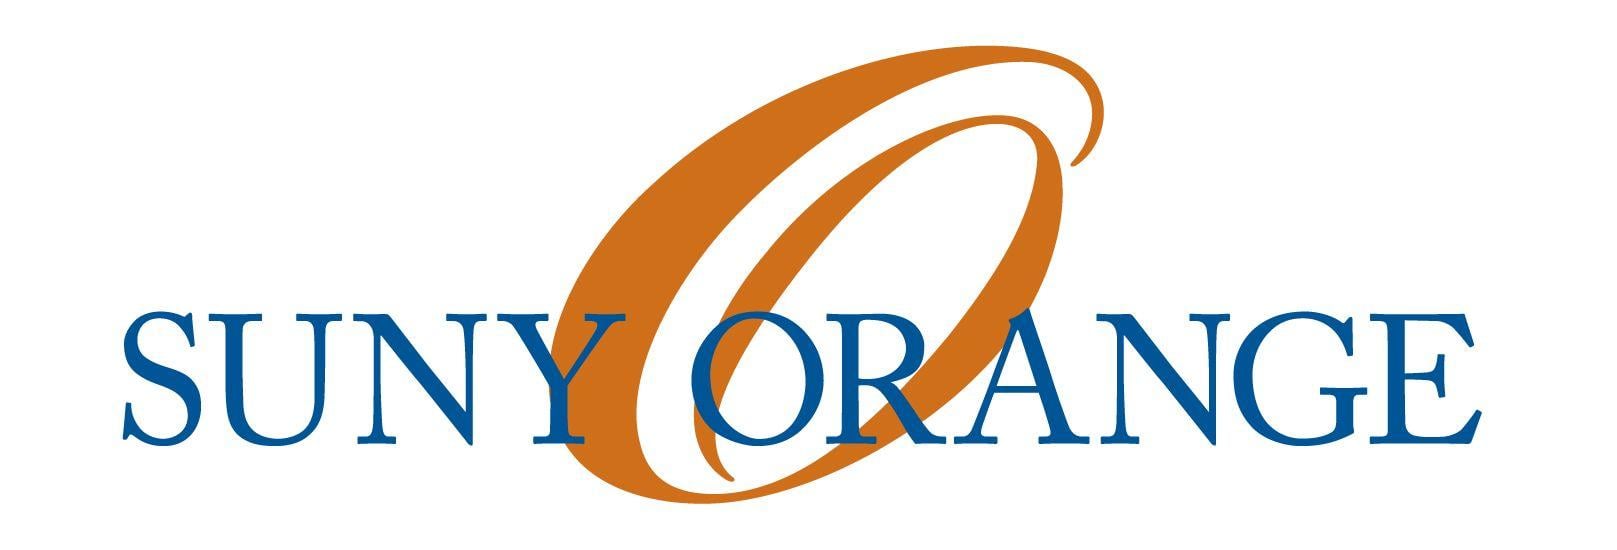 SUNY Orange Logo - SUNY Orange: Media Guide - Publication & Publicity Guidelines